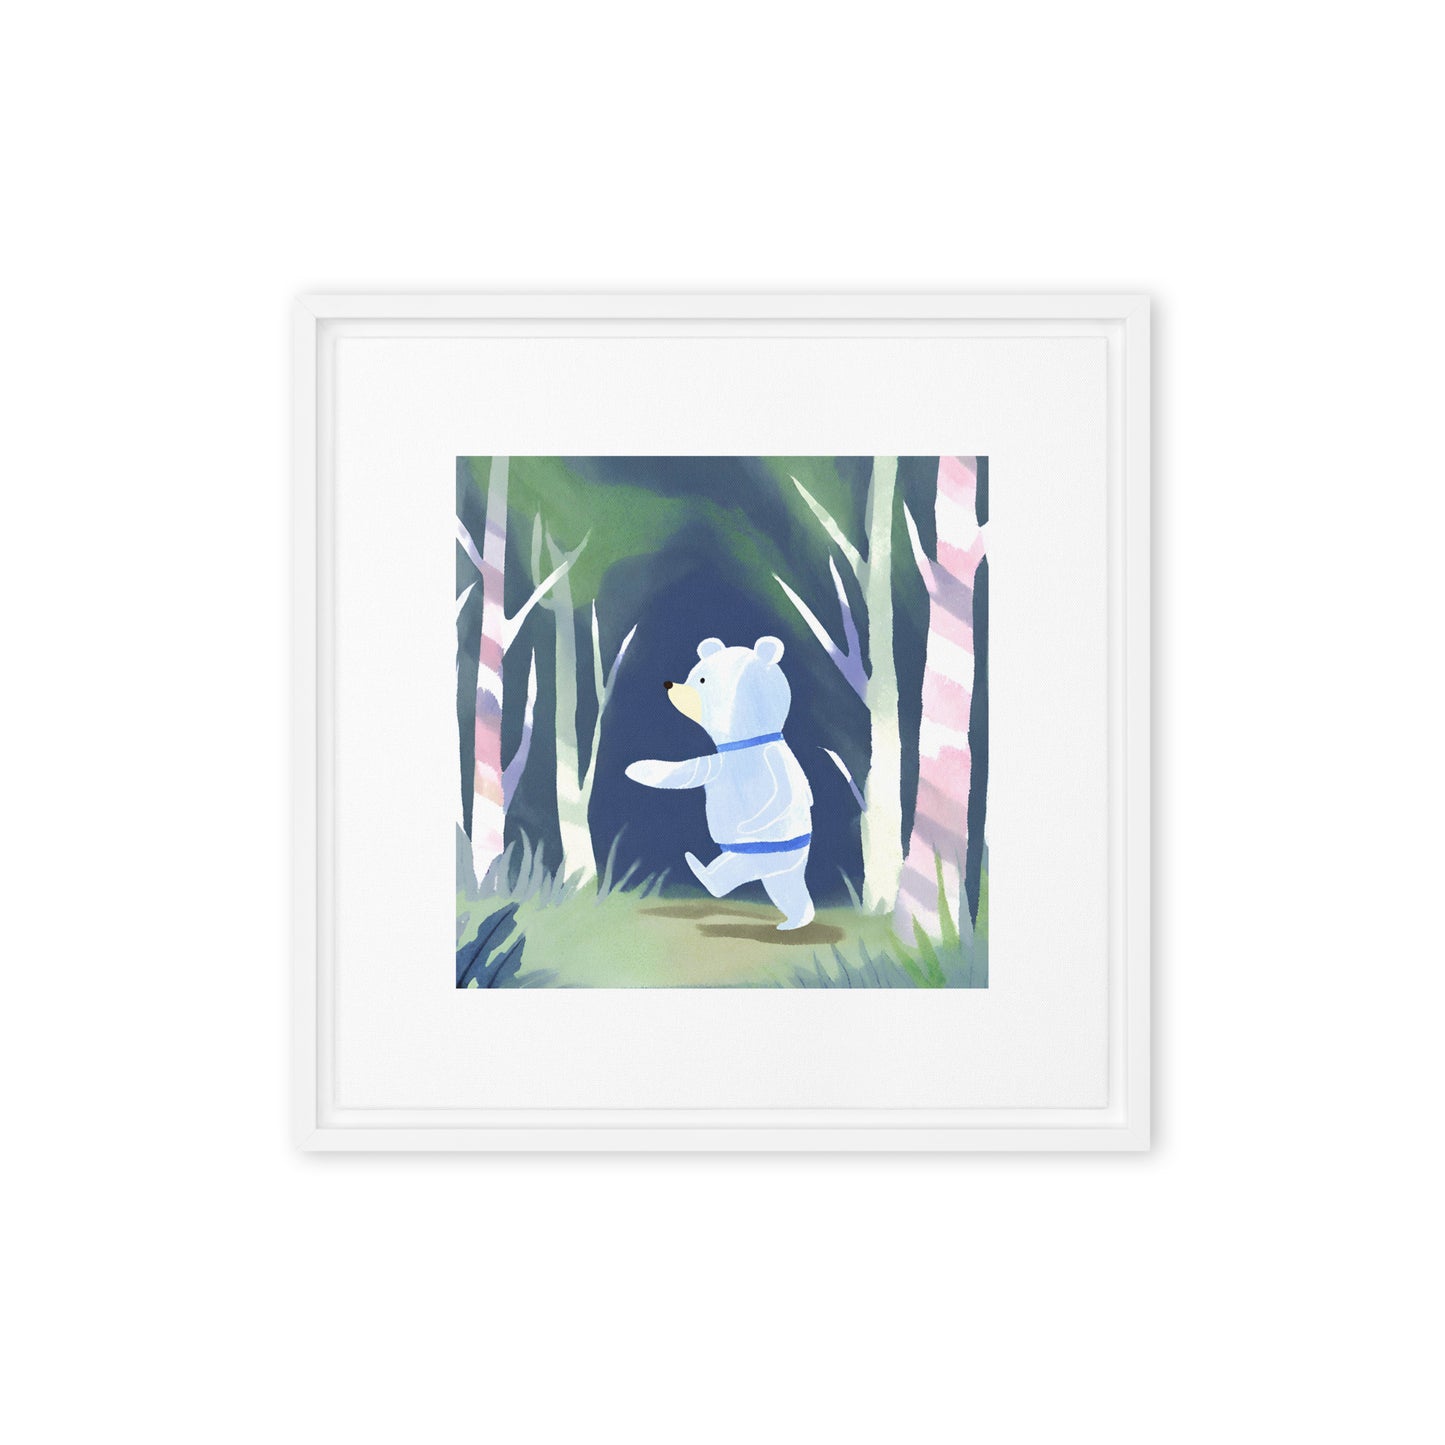 The sleepwalking bear - Framed canvas